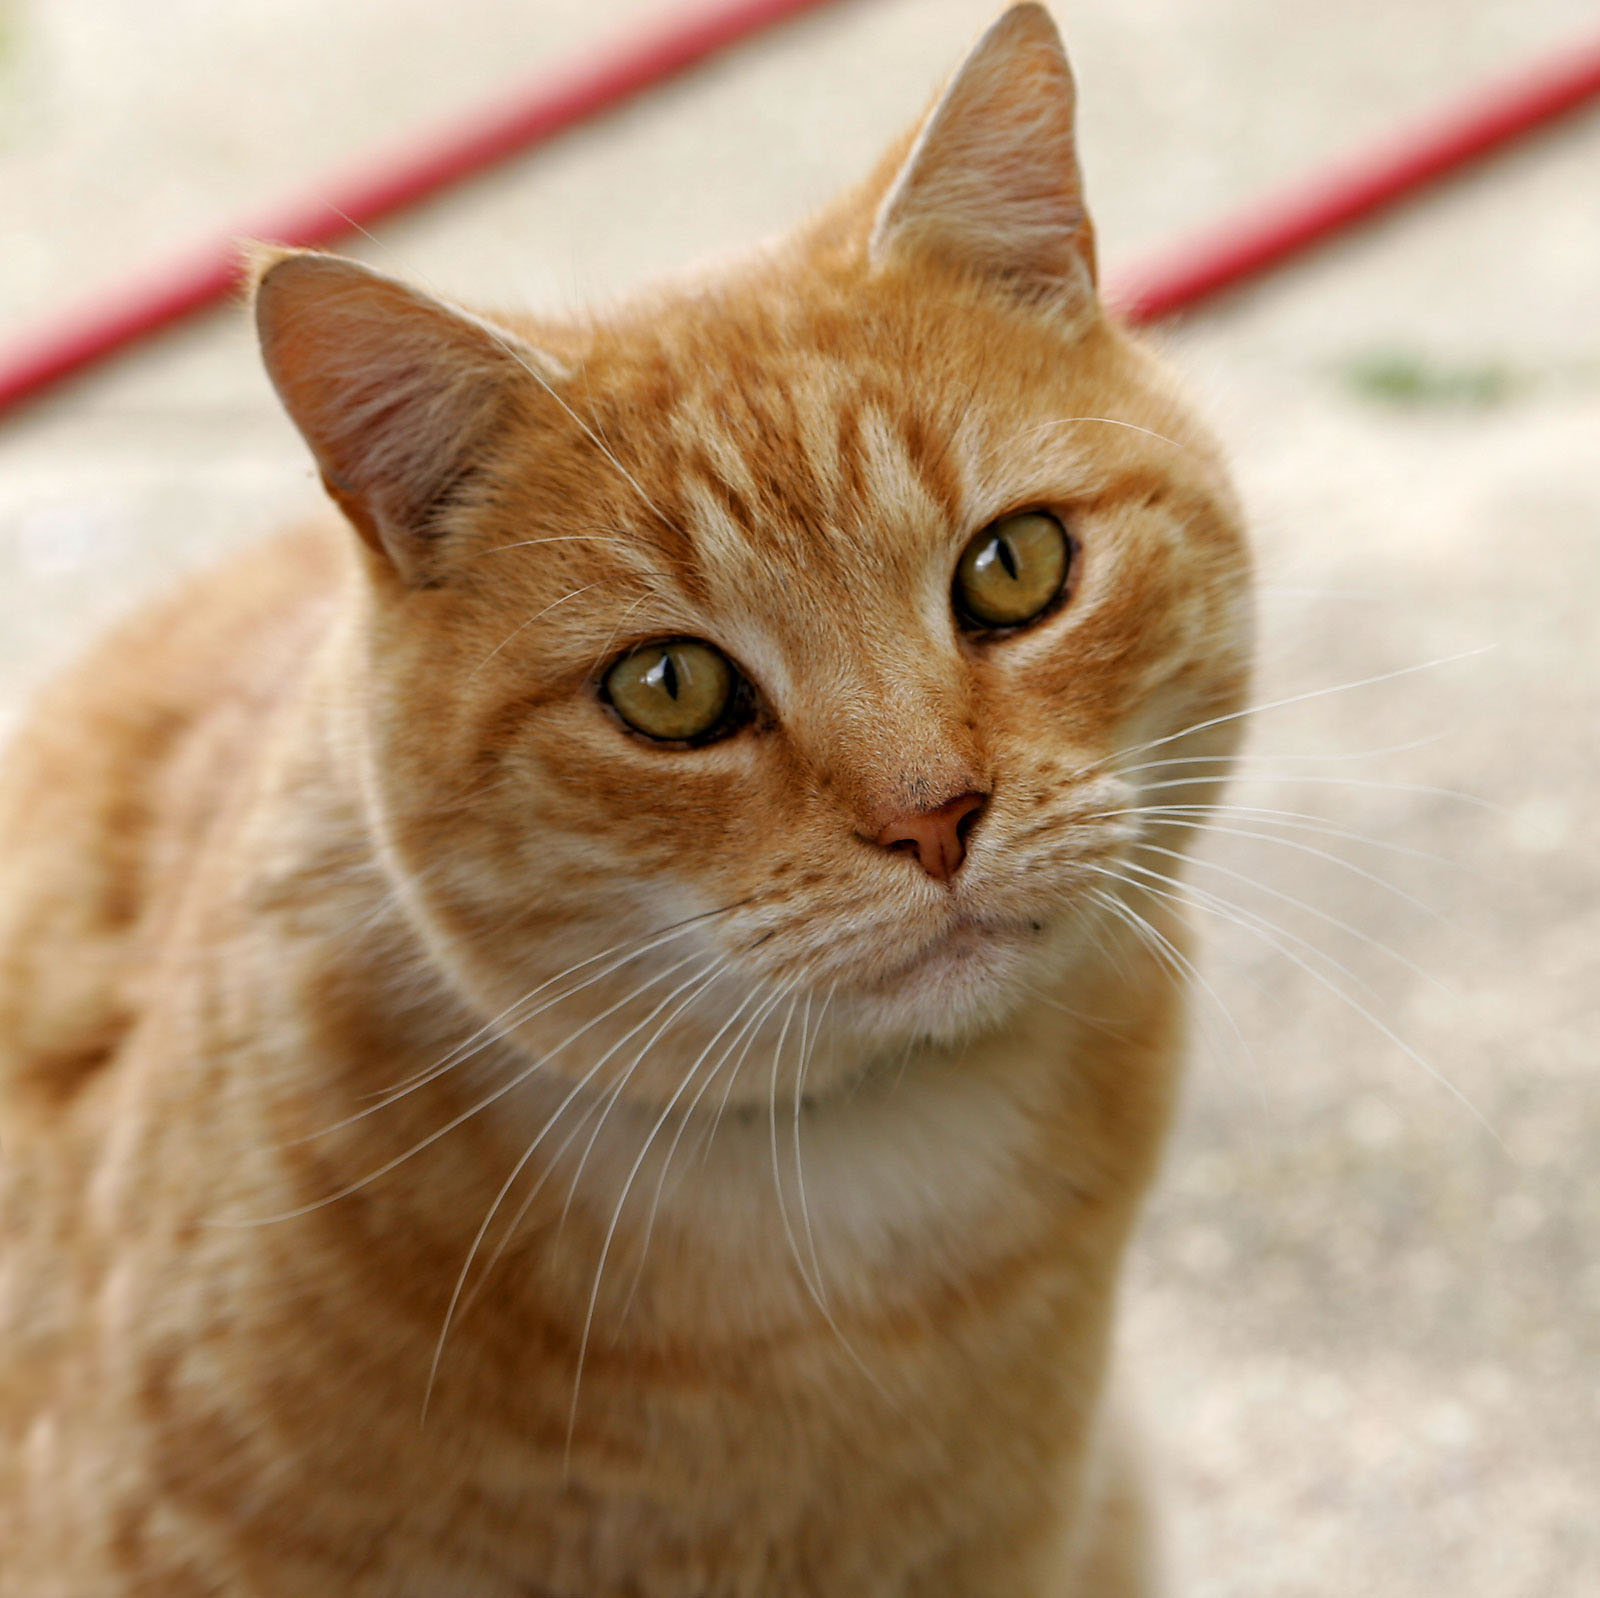 ASRI DEVI: Kucing is Meong